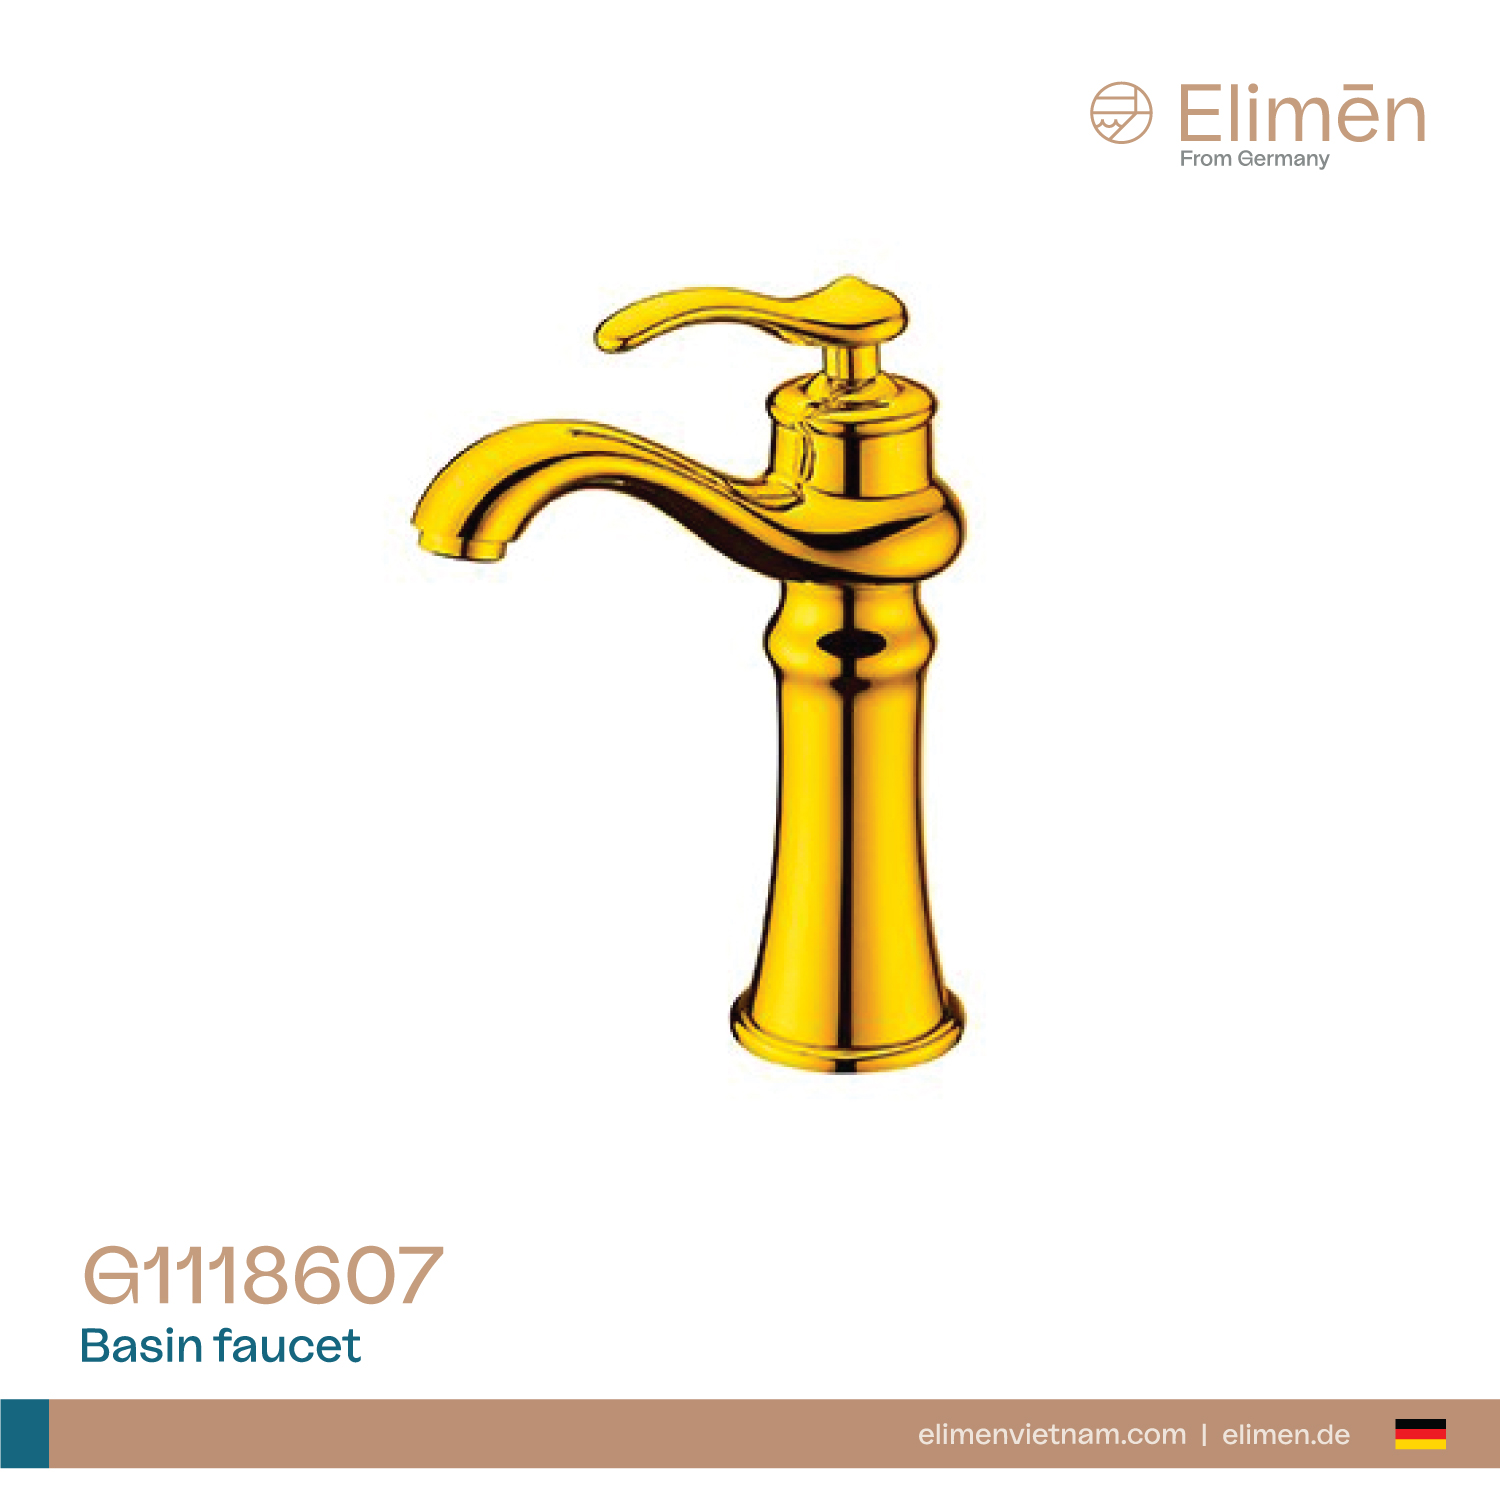 Vòi lavabo Elimen - Mã G1118607